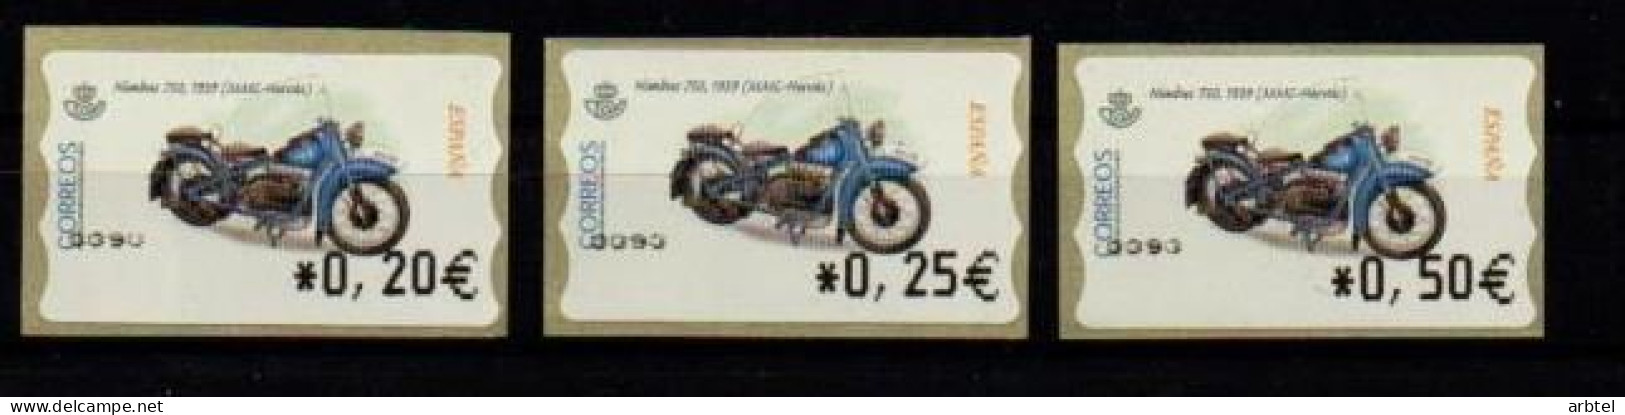 ESPAÑA SPAIN ATM MOTO MOTORCYCLE NIMBUS 750 - Motorräder